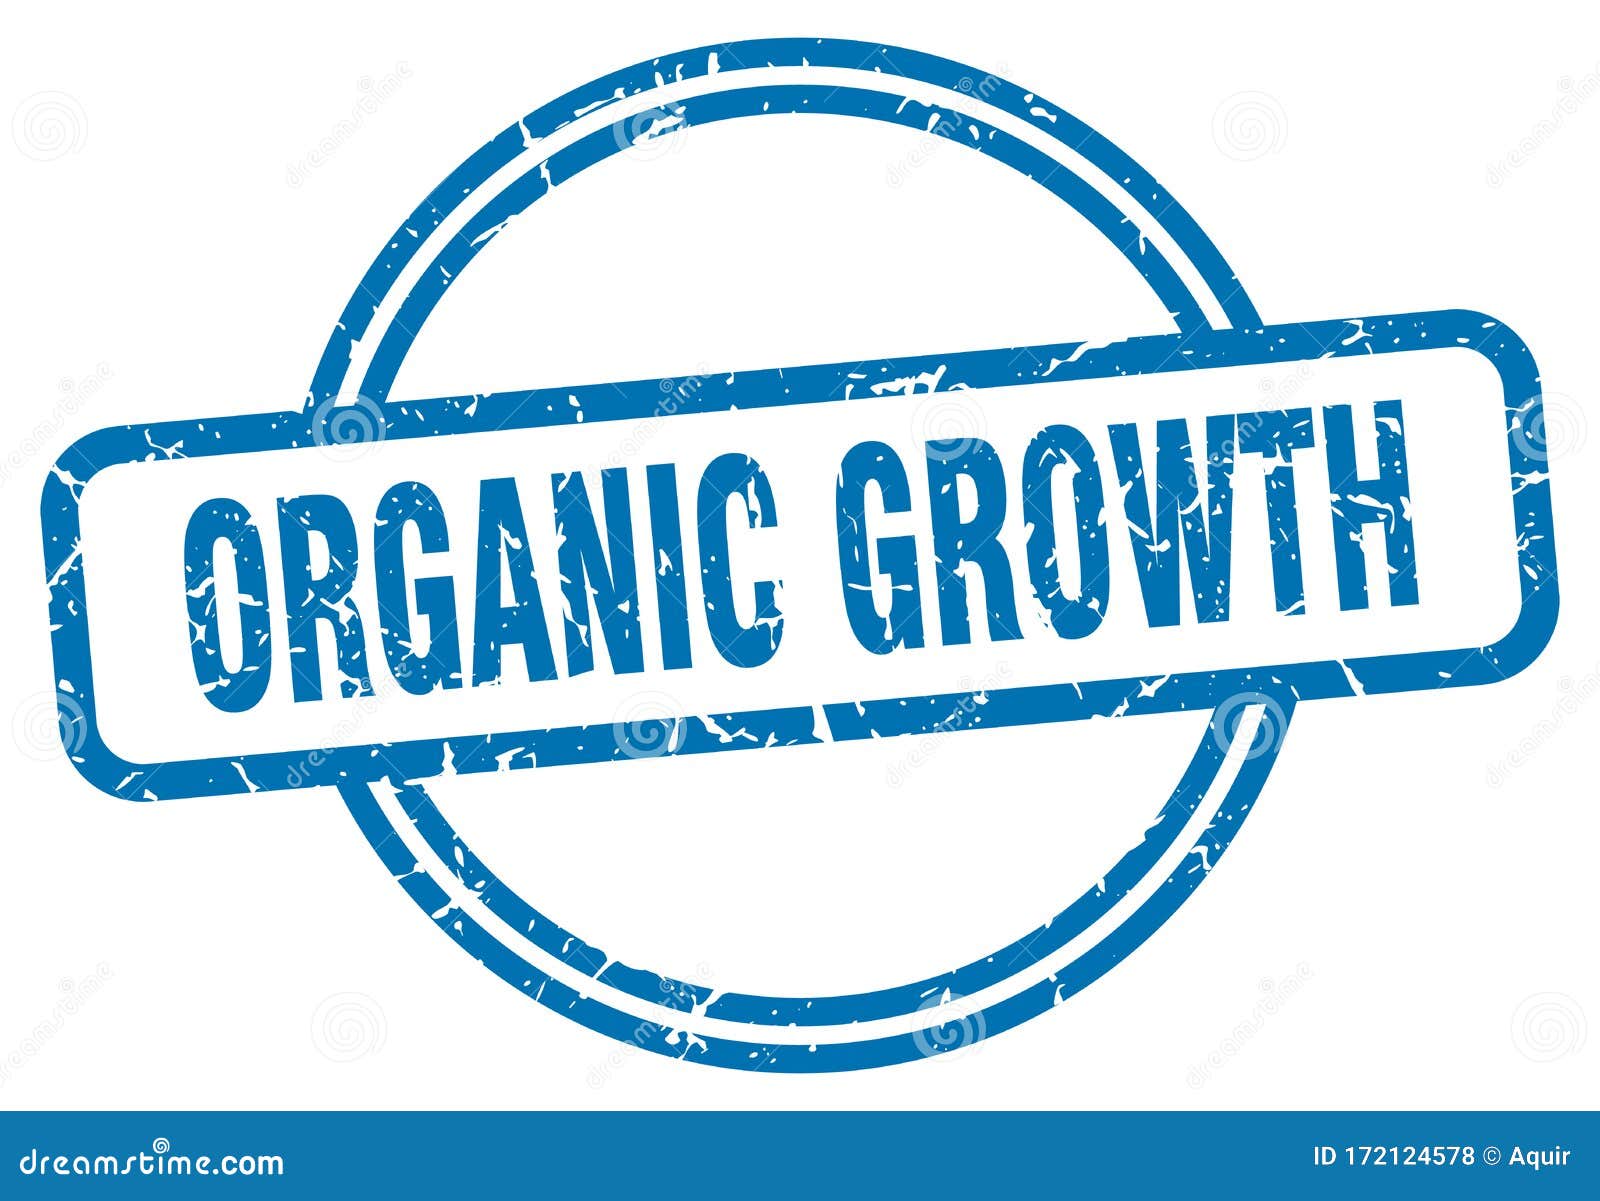 organic growth stamp. organic growth round grunge sign. organic growth tag